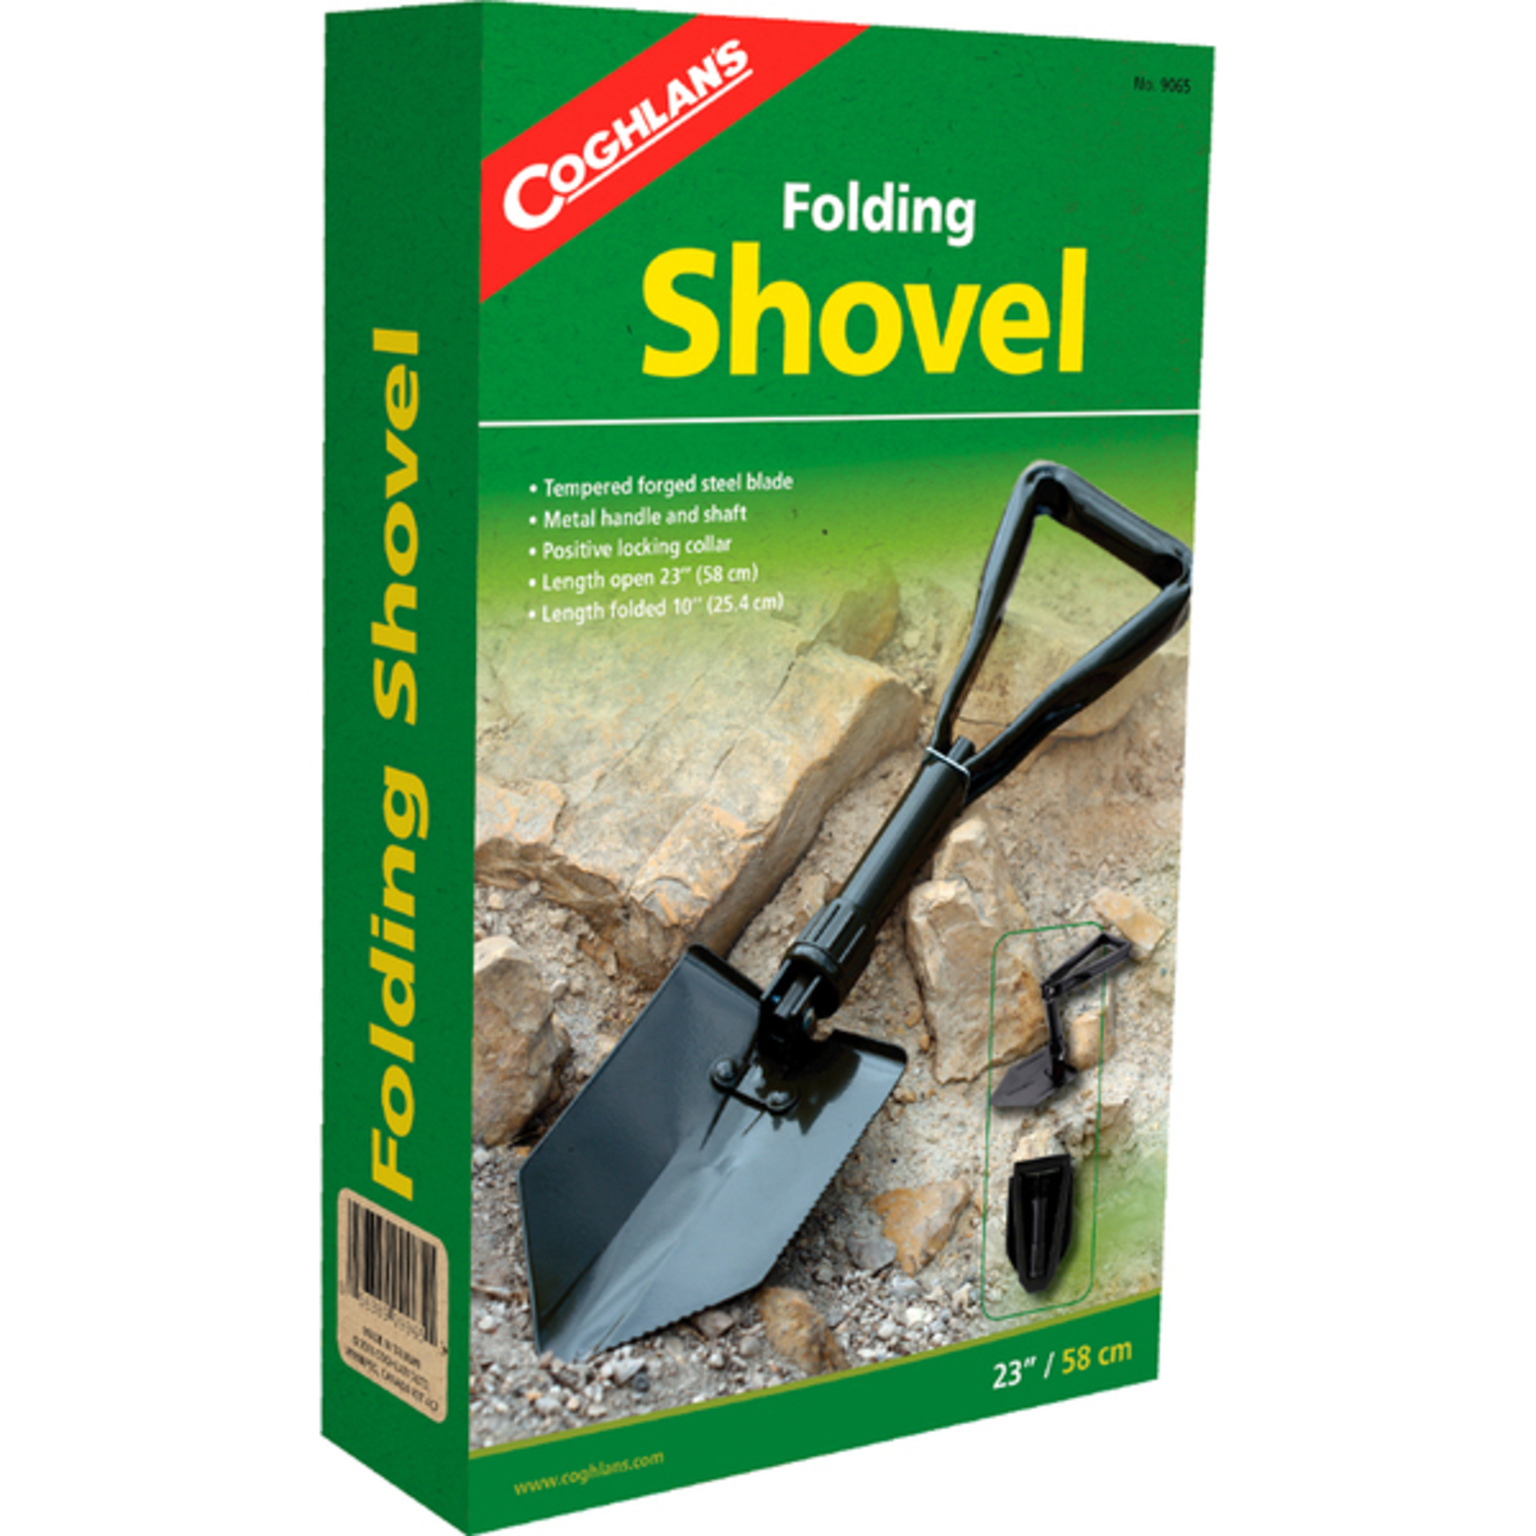 Läs mer om CoghlanÂ´s Folding Shovel